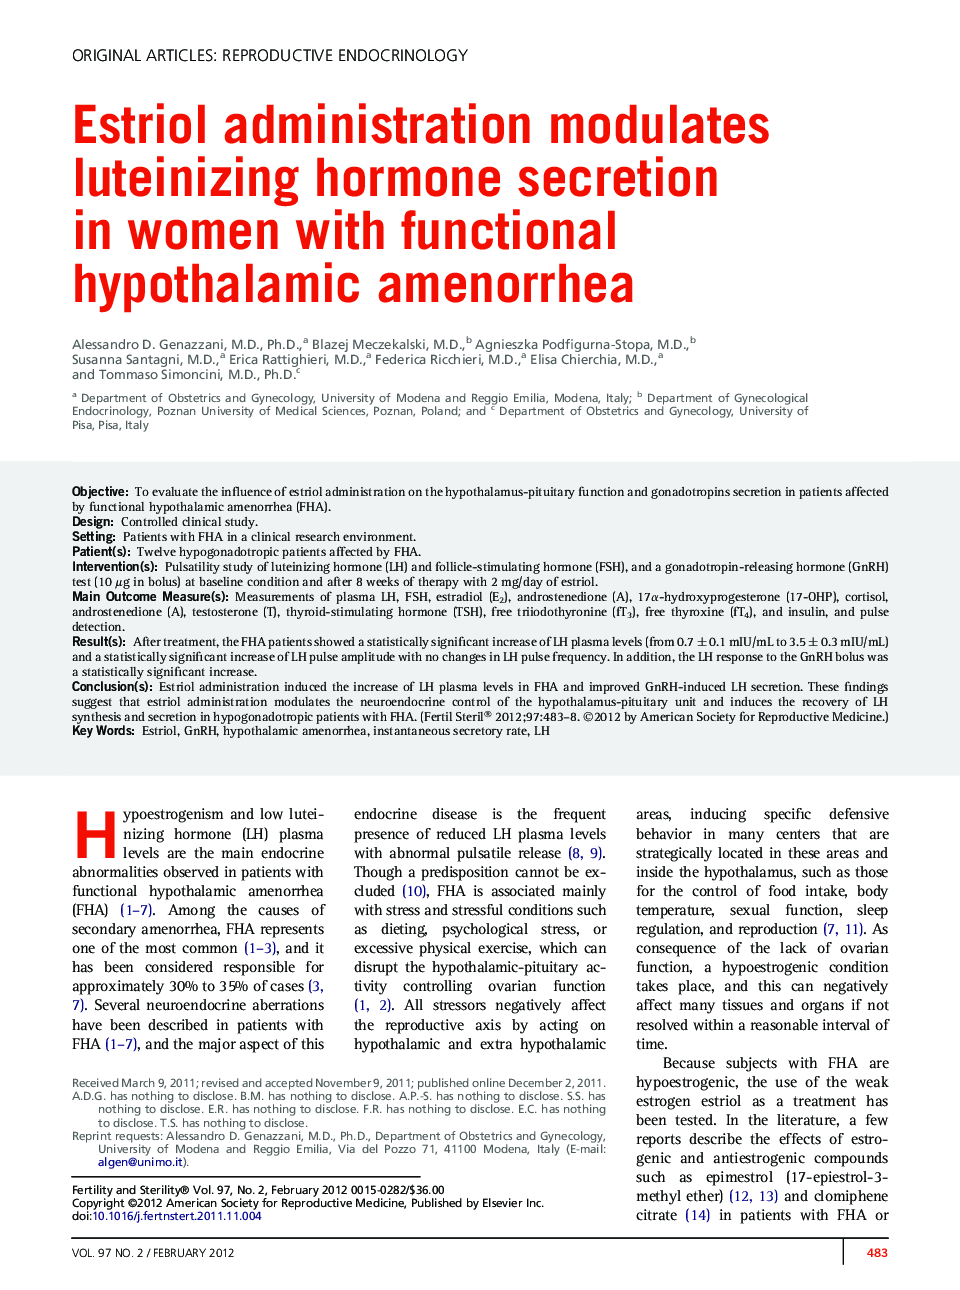 Estriol administration modulates luteinizing hormone secretion in women with functional hypothalamic amenorrhea 